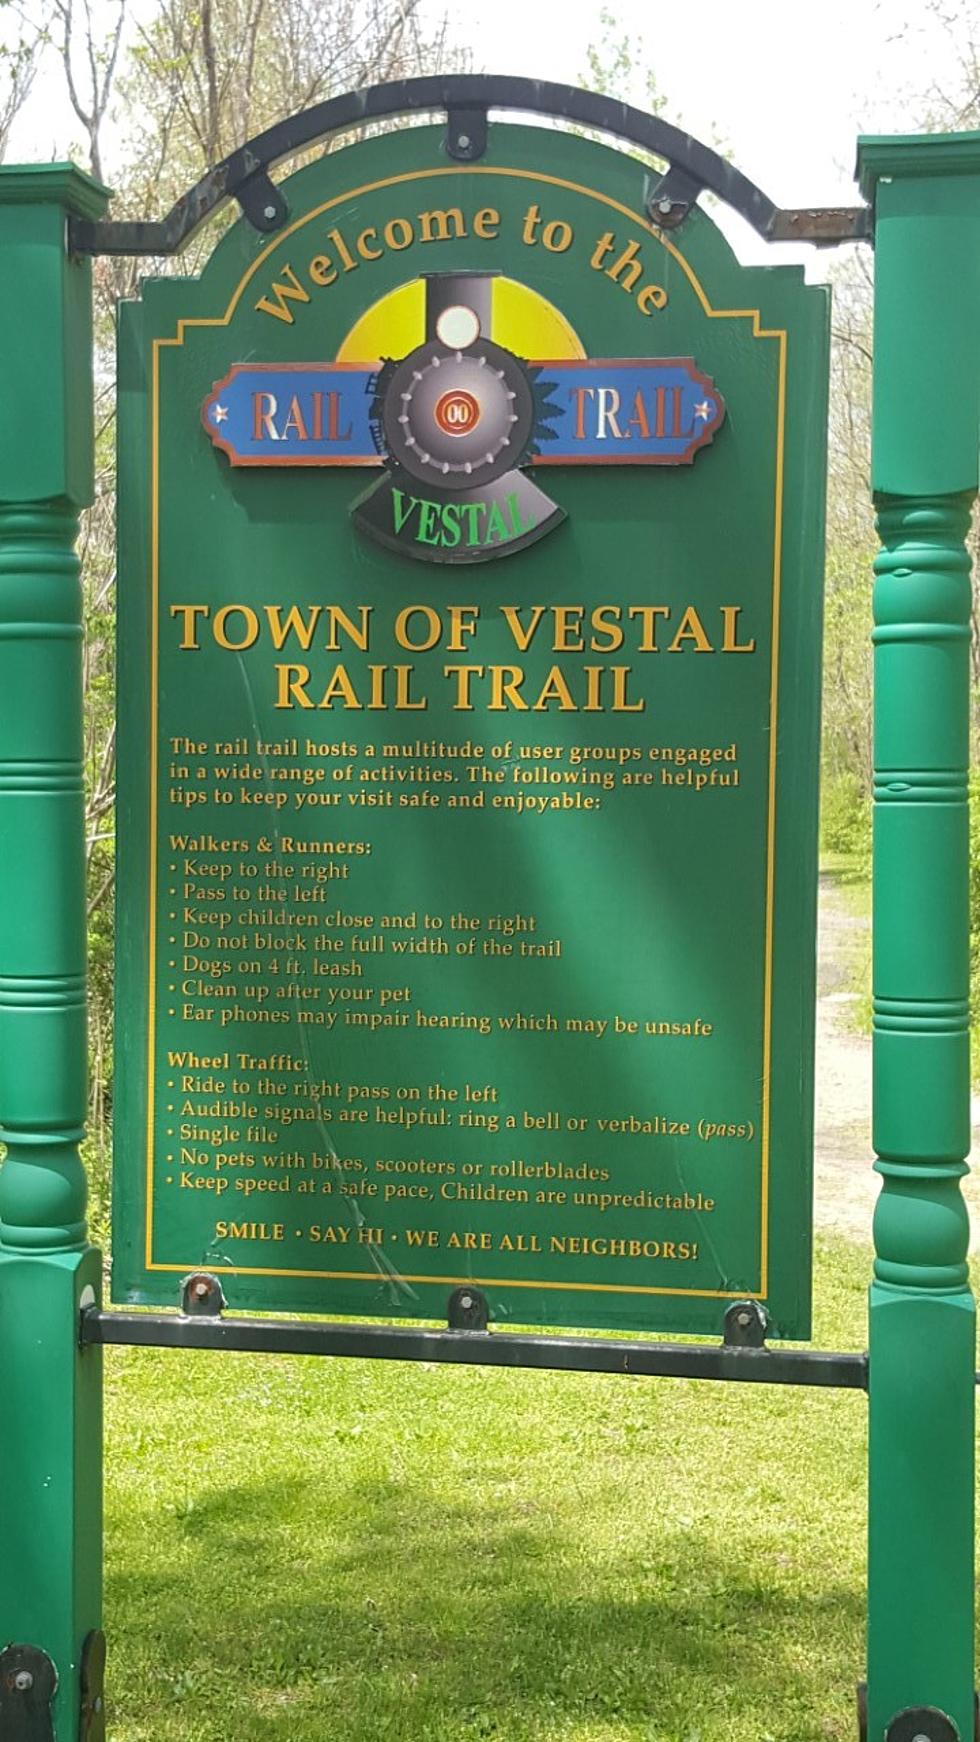 Vestal Rail Trail Offers Plenty to See